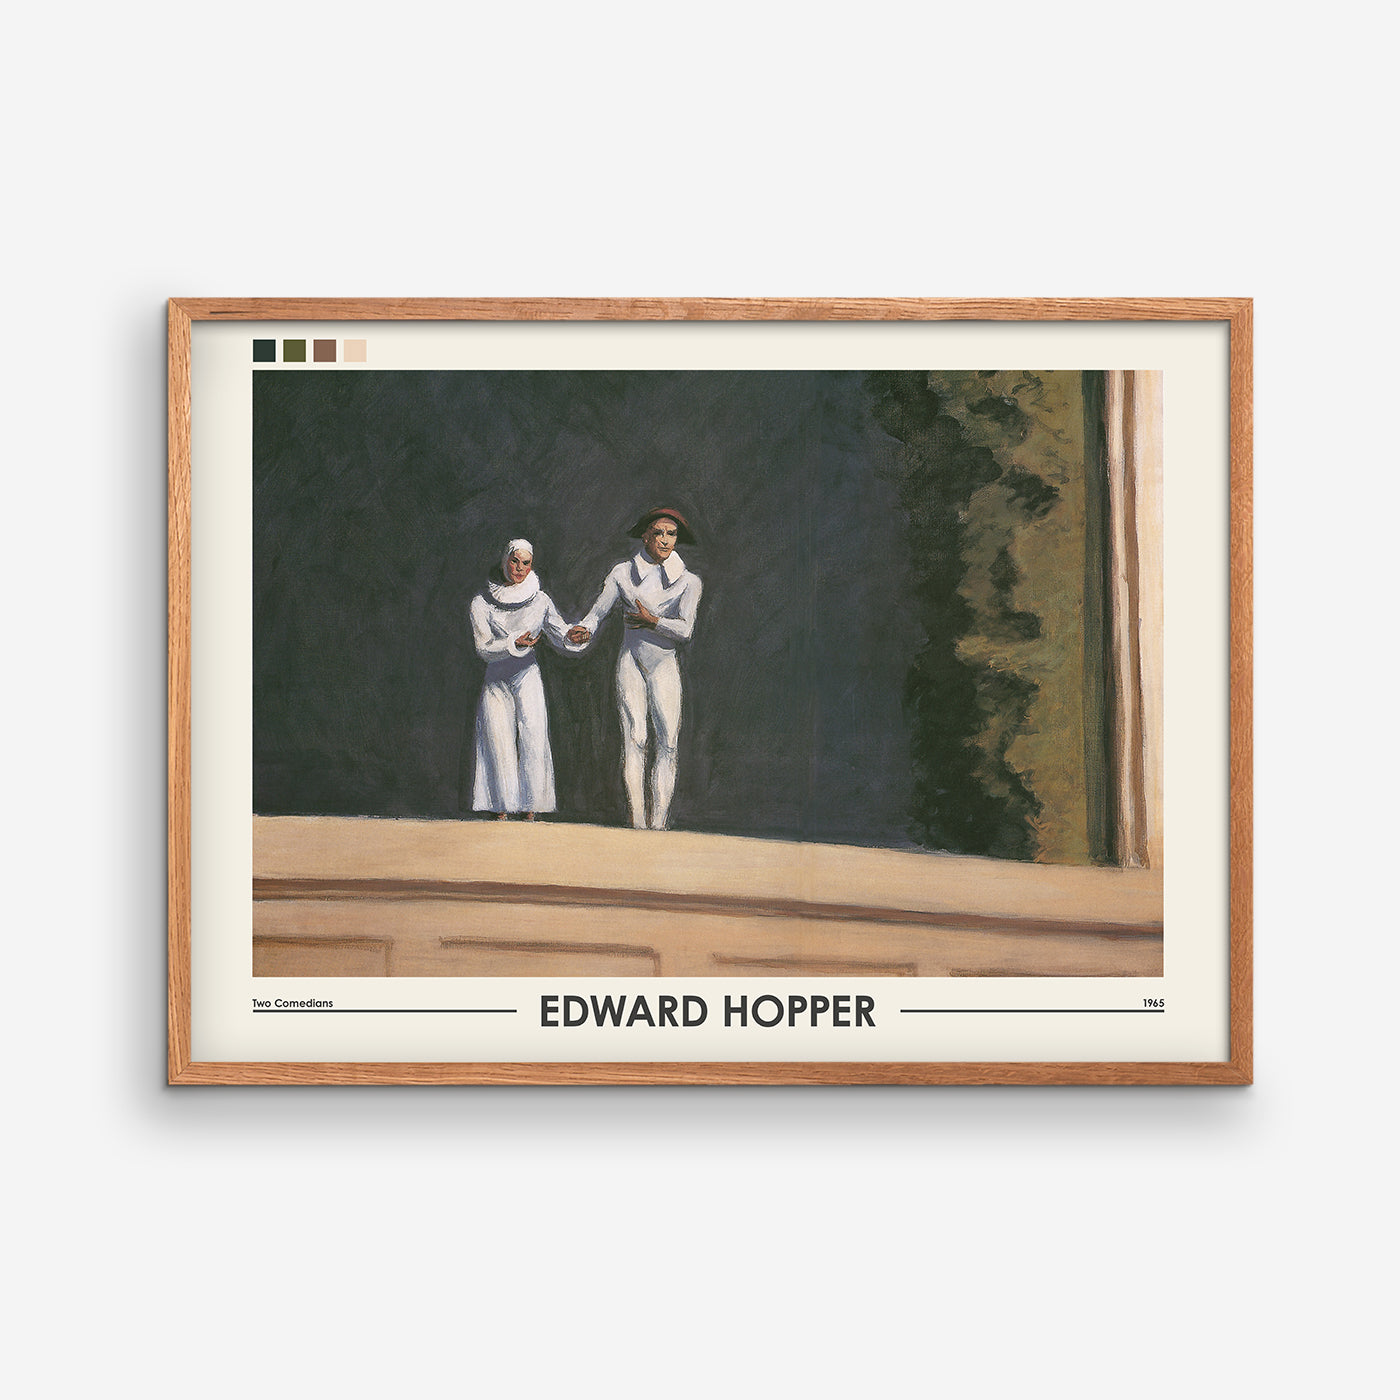 Two Comedians - Edward Hopper